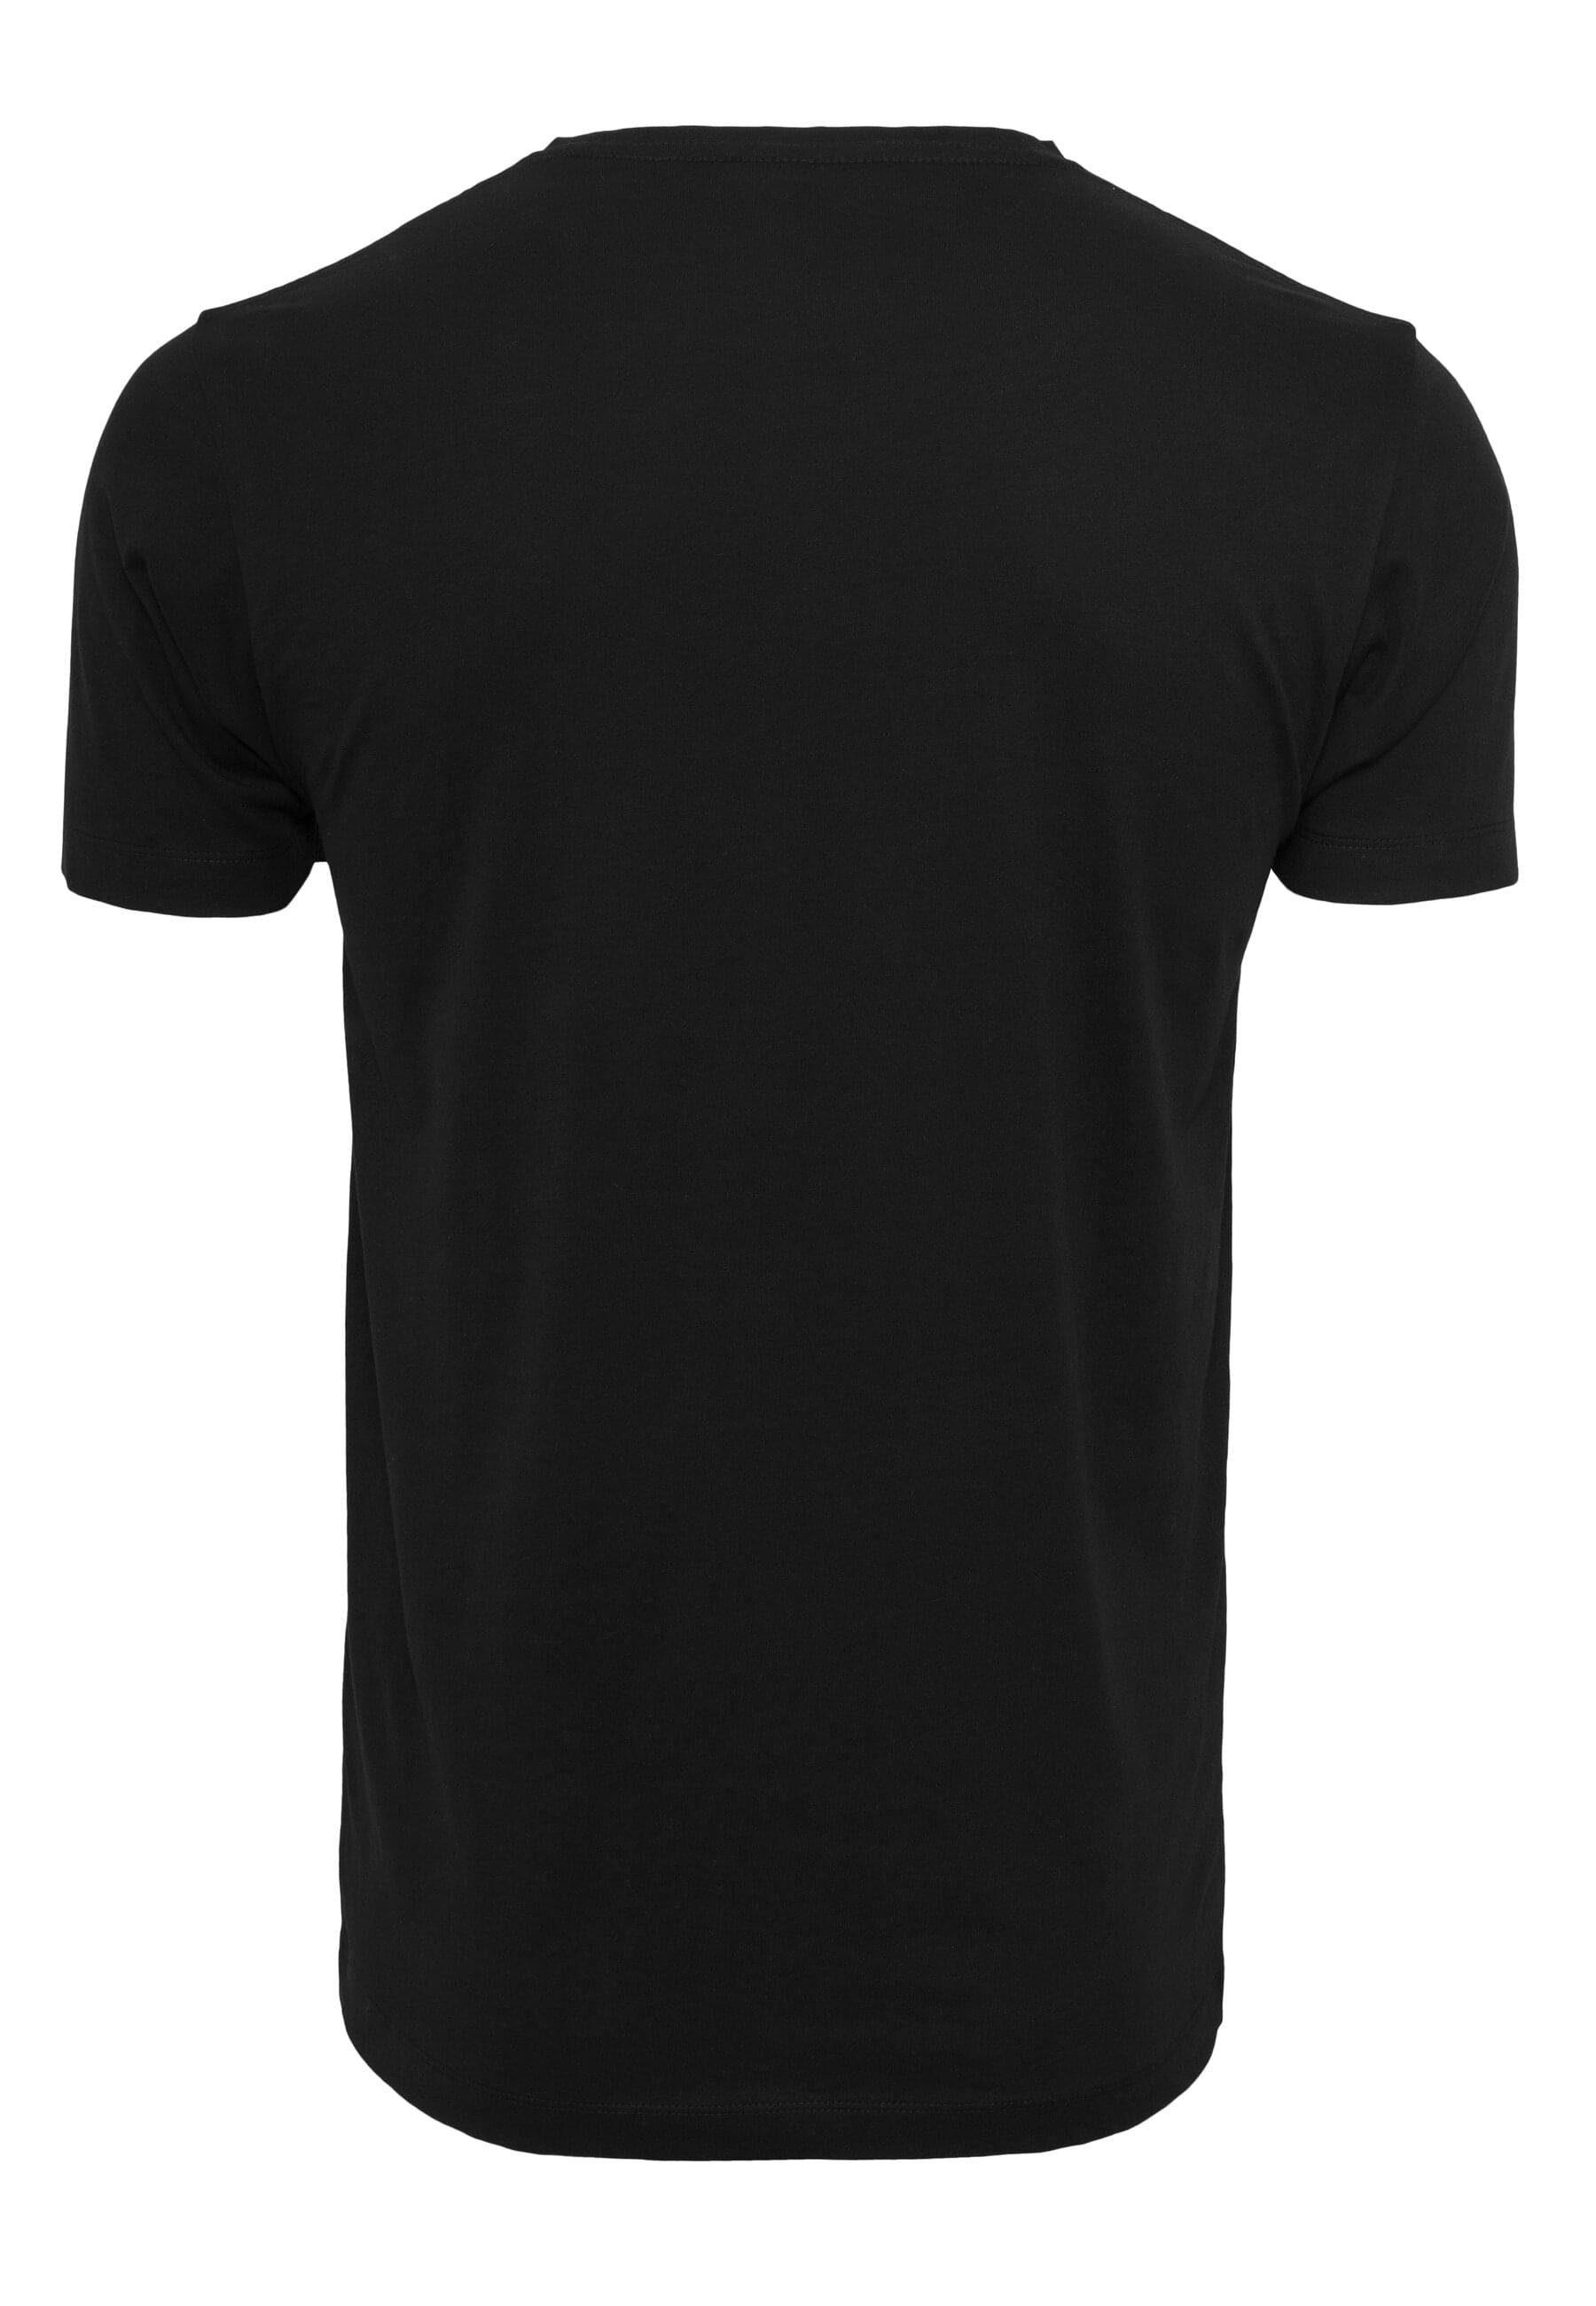 Herren Tee Wiz Tee (1-tlg) Khalifa Khalifa Smokey MT637 Smokey Wiz Smiley Mister MisterTee T-Shirt black